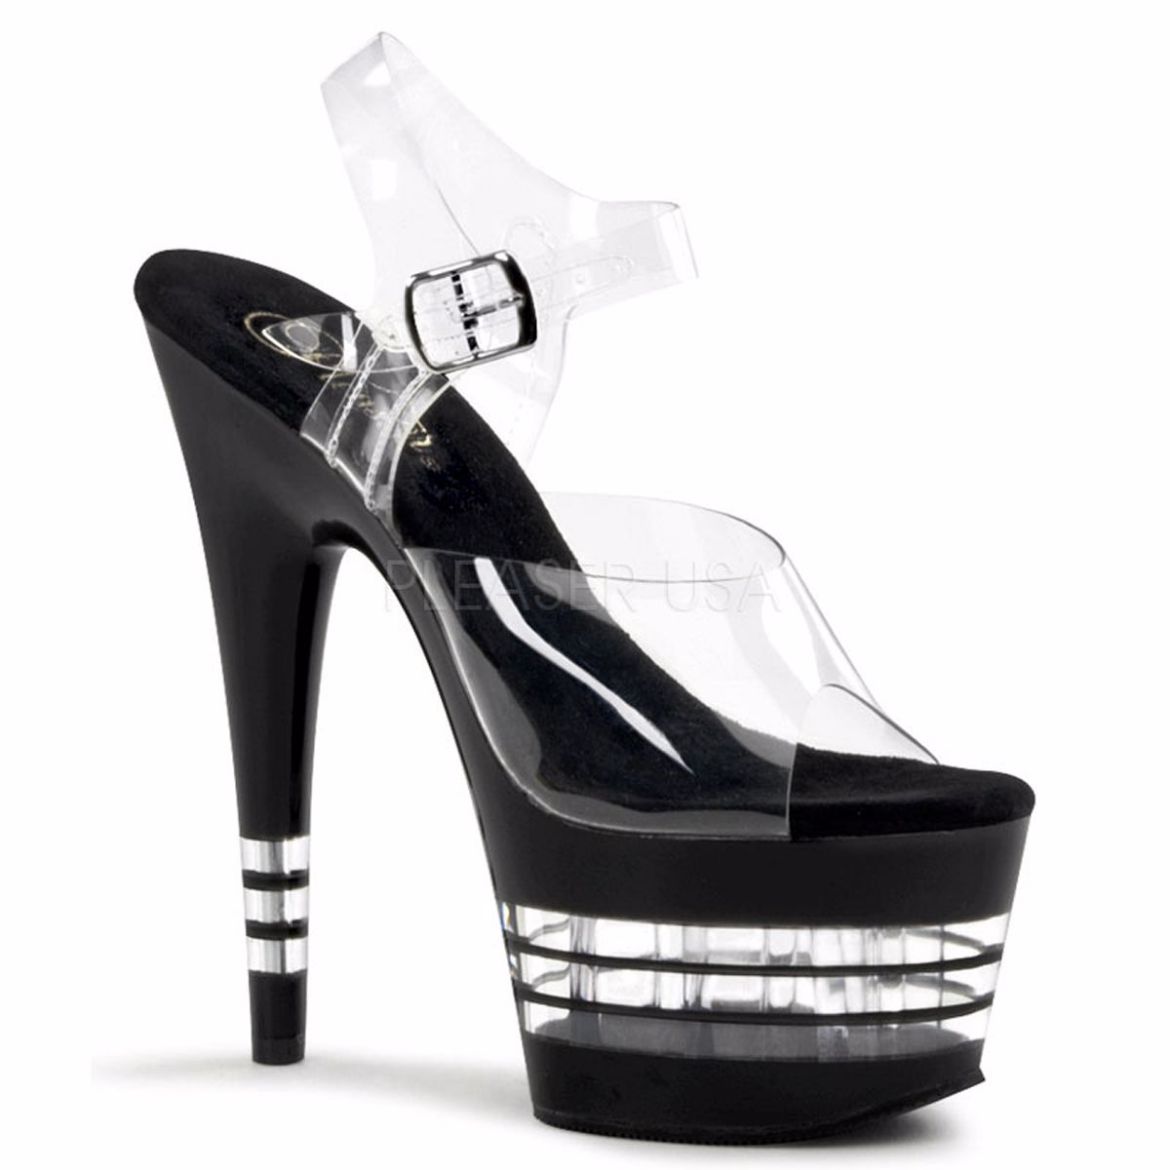 Product image of Pleaser Adore-708Ln Clear/Black, 7 inch (17.8 cm) Heel, 2 3/4 inch (7 cm) Platform Sandal Shoes